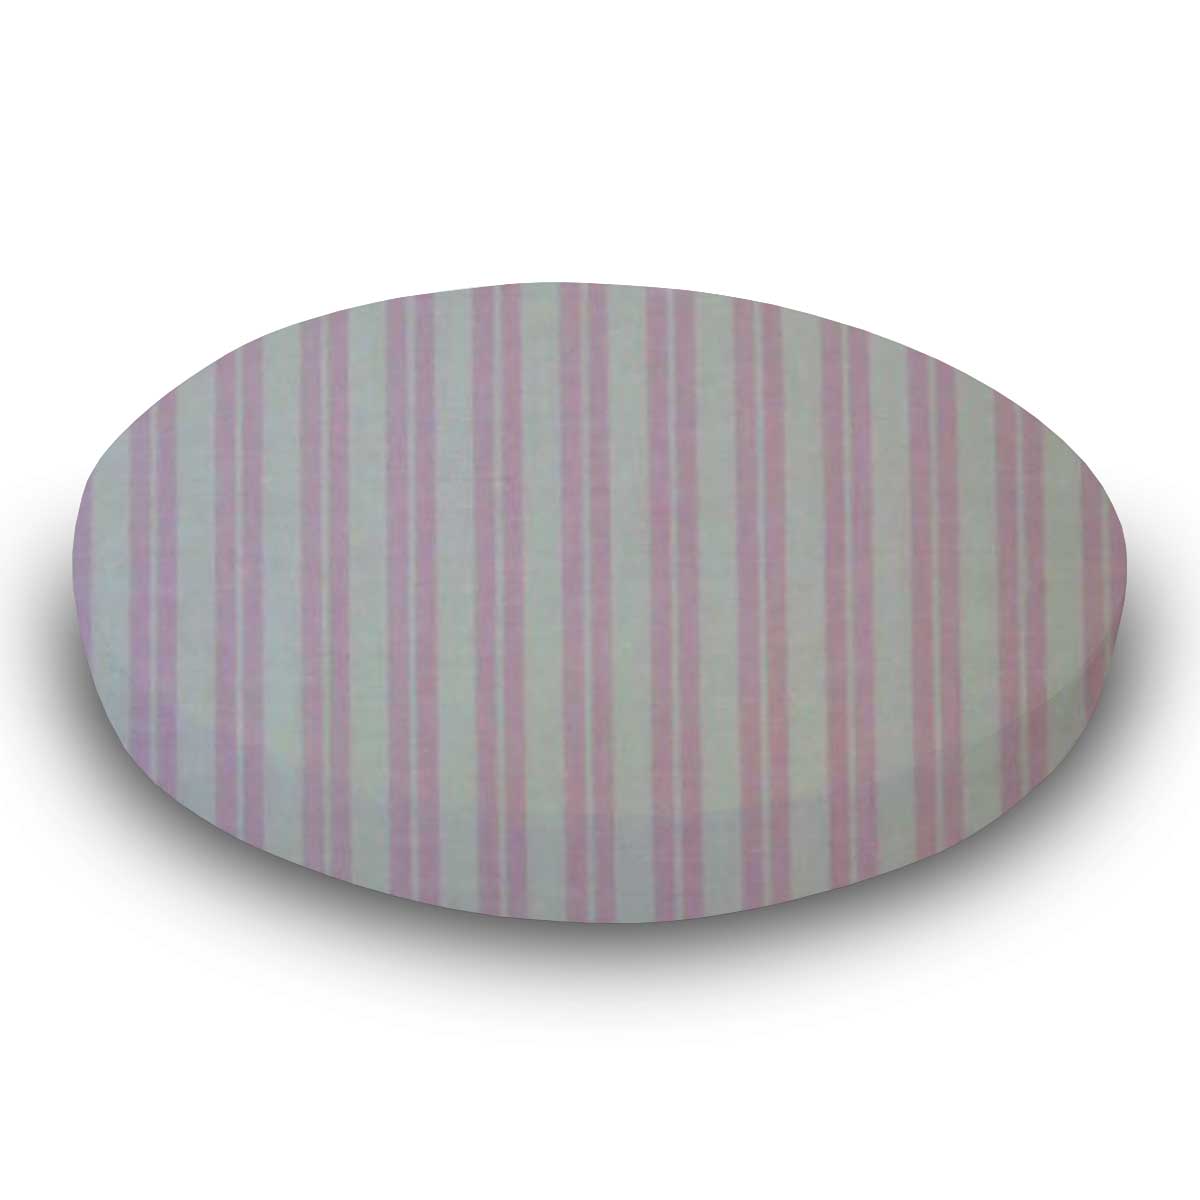 Oval Crib (Stokke Sleepi) - Pink Dual Stripe - Fitted  Oval